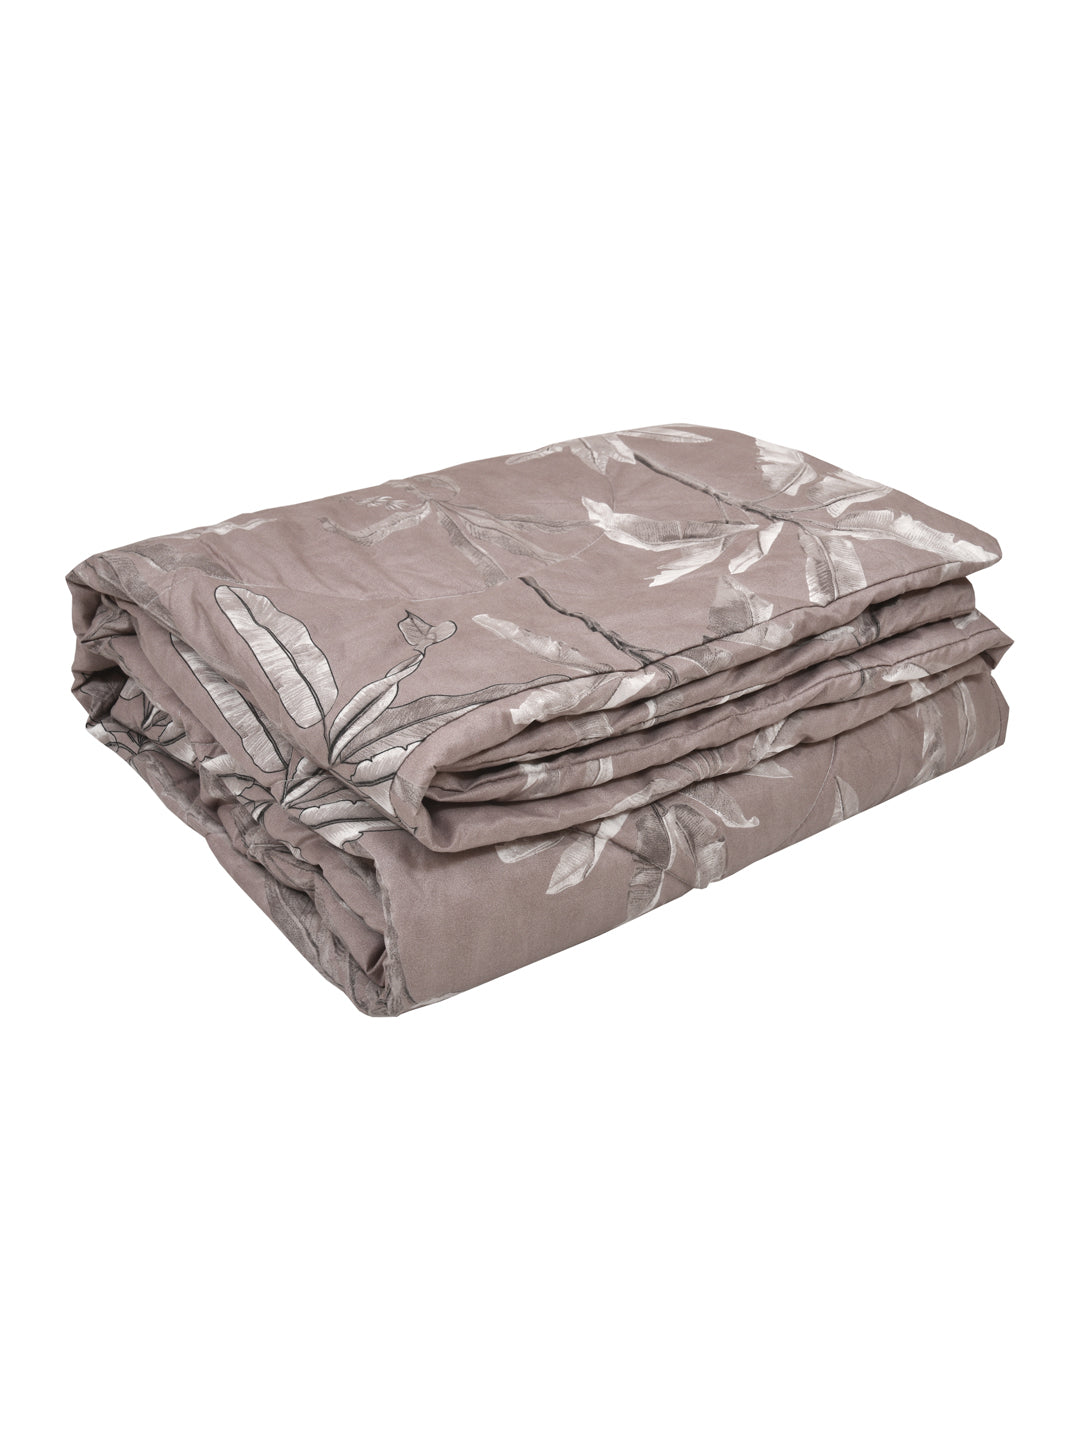 Mauve Tropical Print Double bed AC Comforter